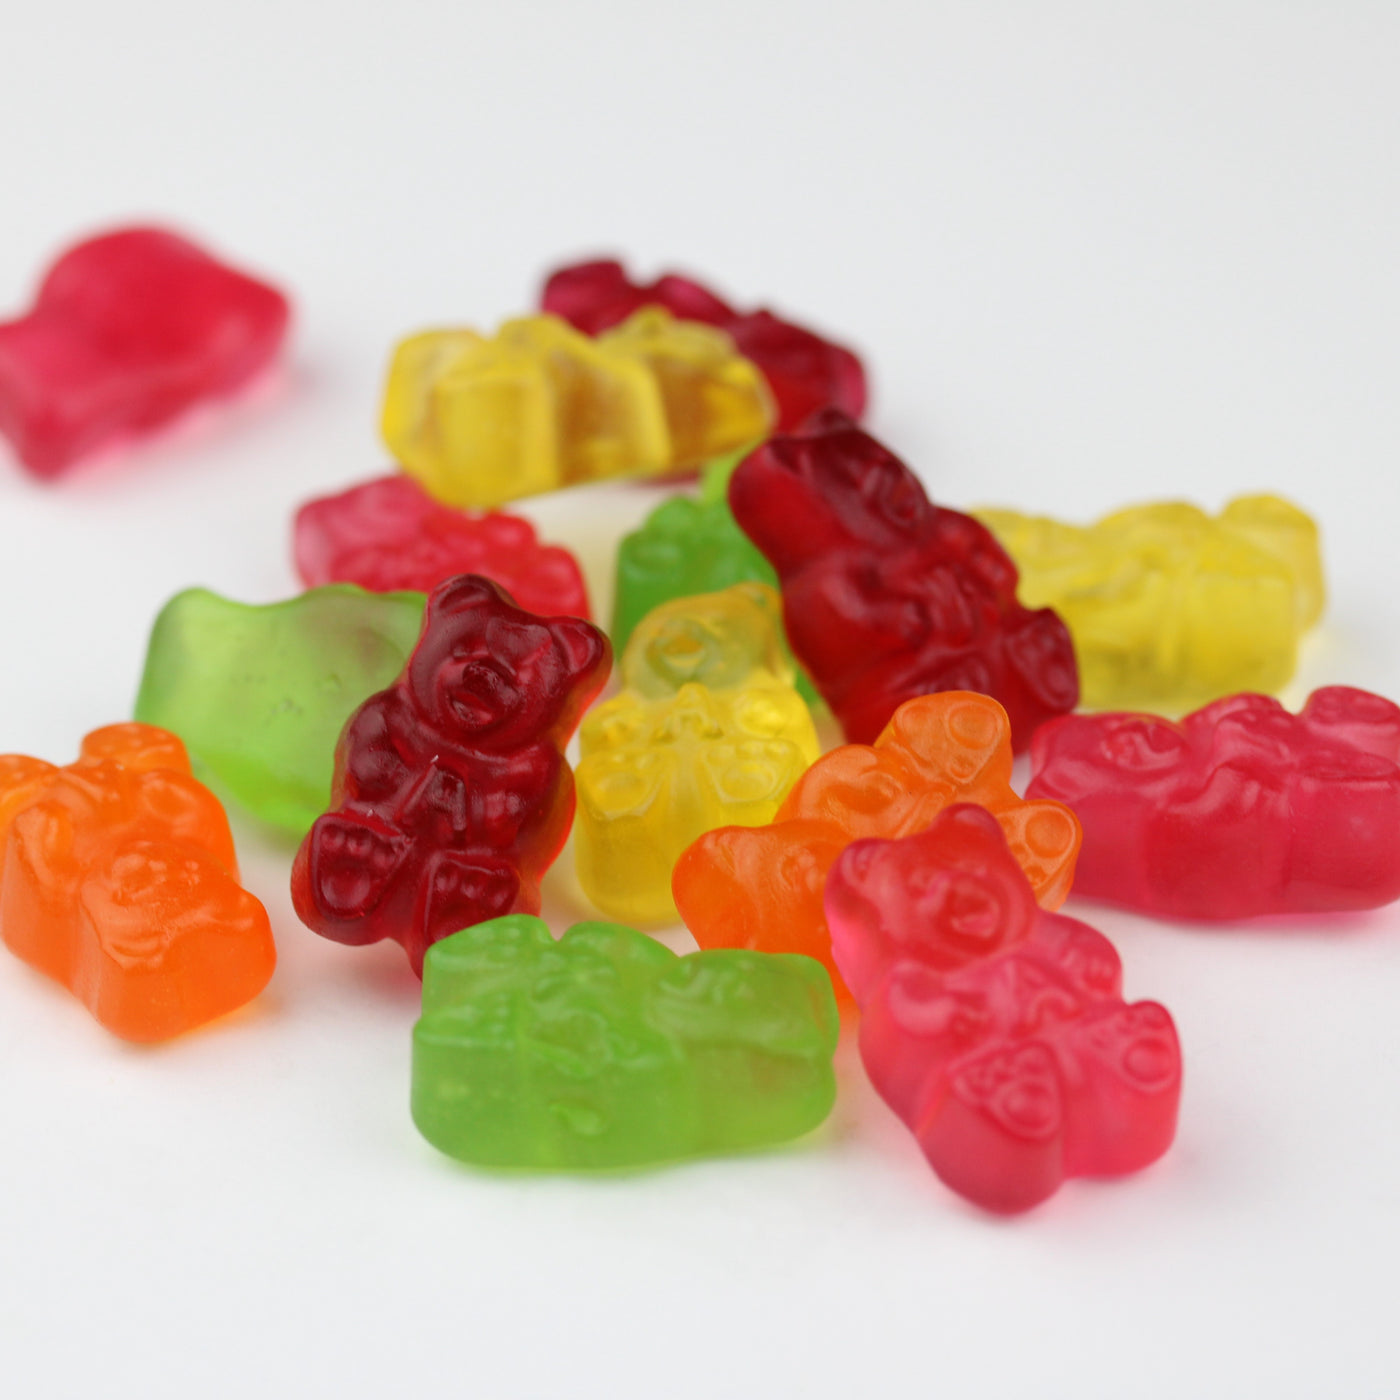 All Natural Gummi Bears